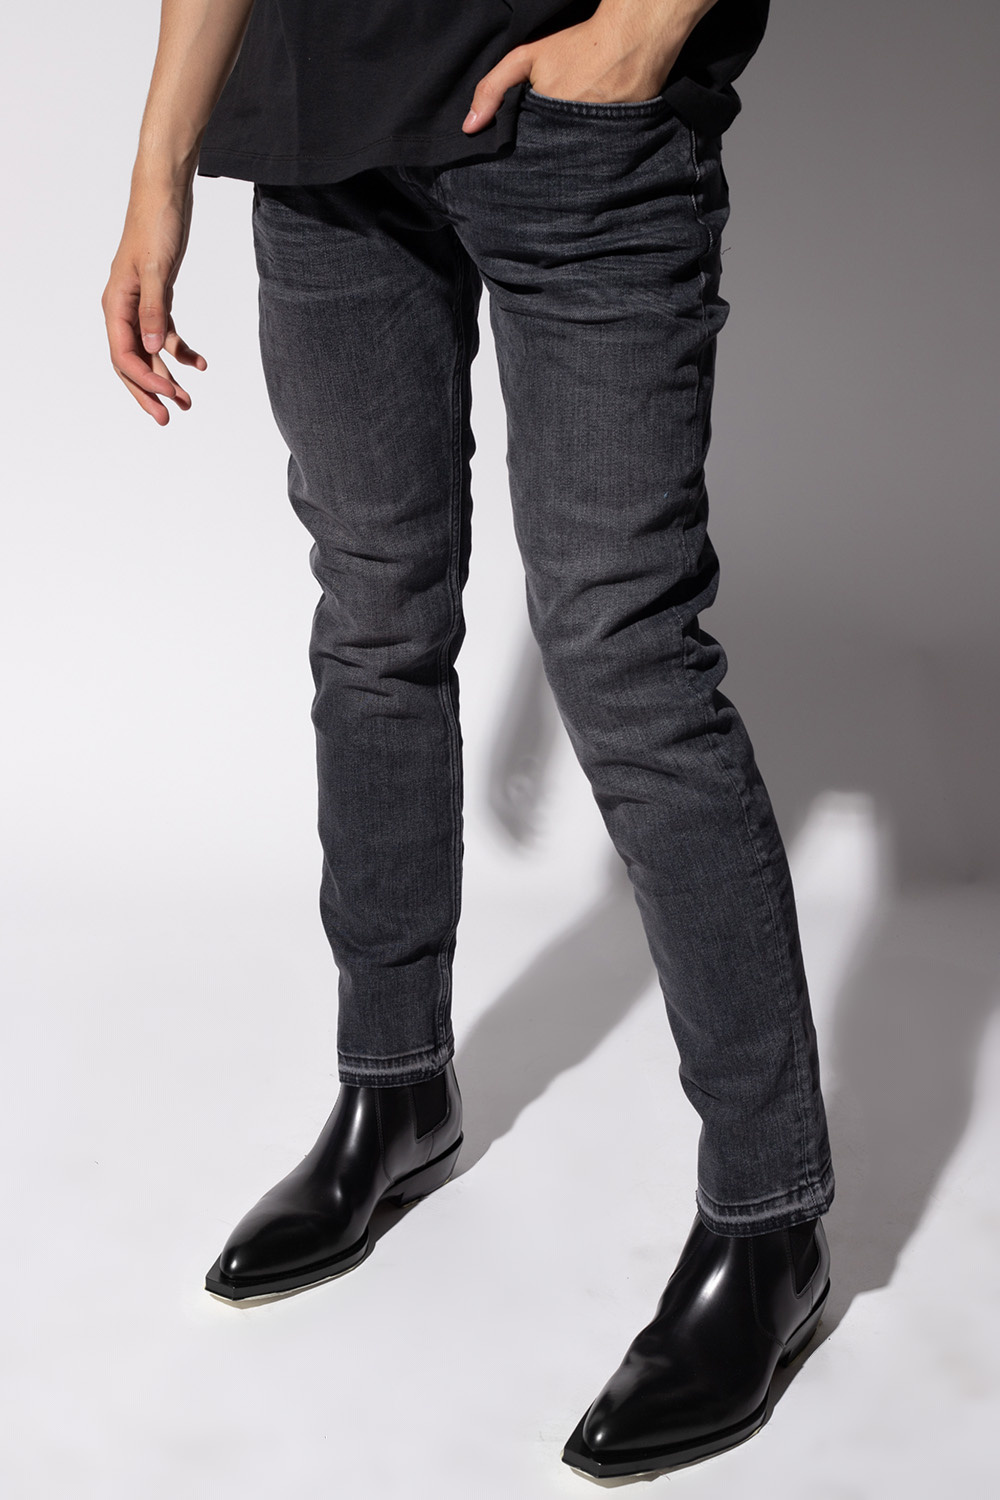 AllSaints 'Rex' jeans | Men's Clothing | Vitkac